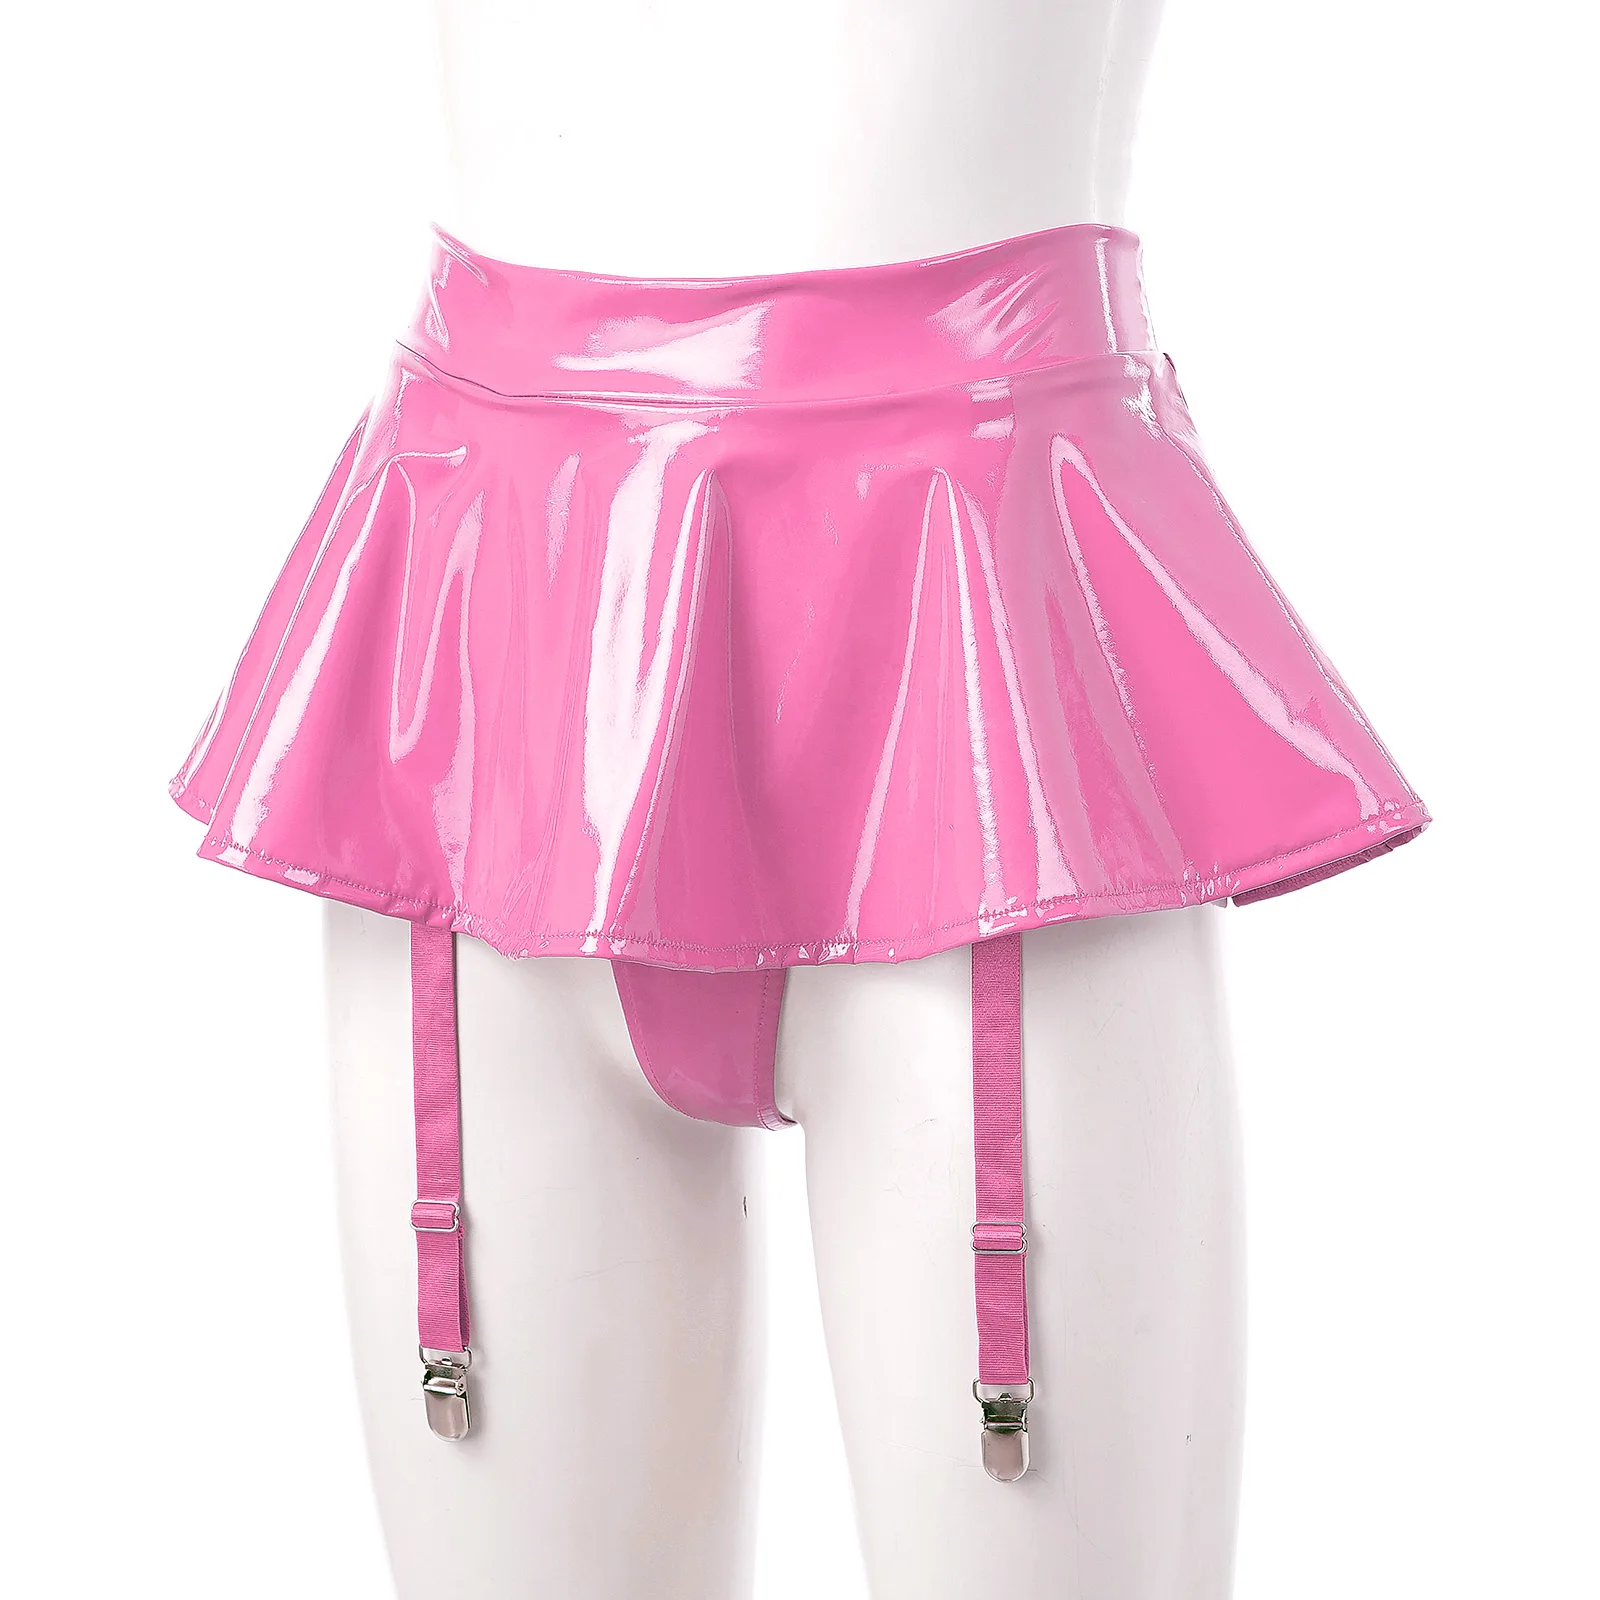 Womens Wet Look Patent Leather Ruffle Mini Skirt Built-in Thongs Garter Belts Metal Clips Lingerie Miniskirt Rave Party Clubwear